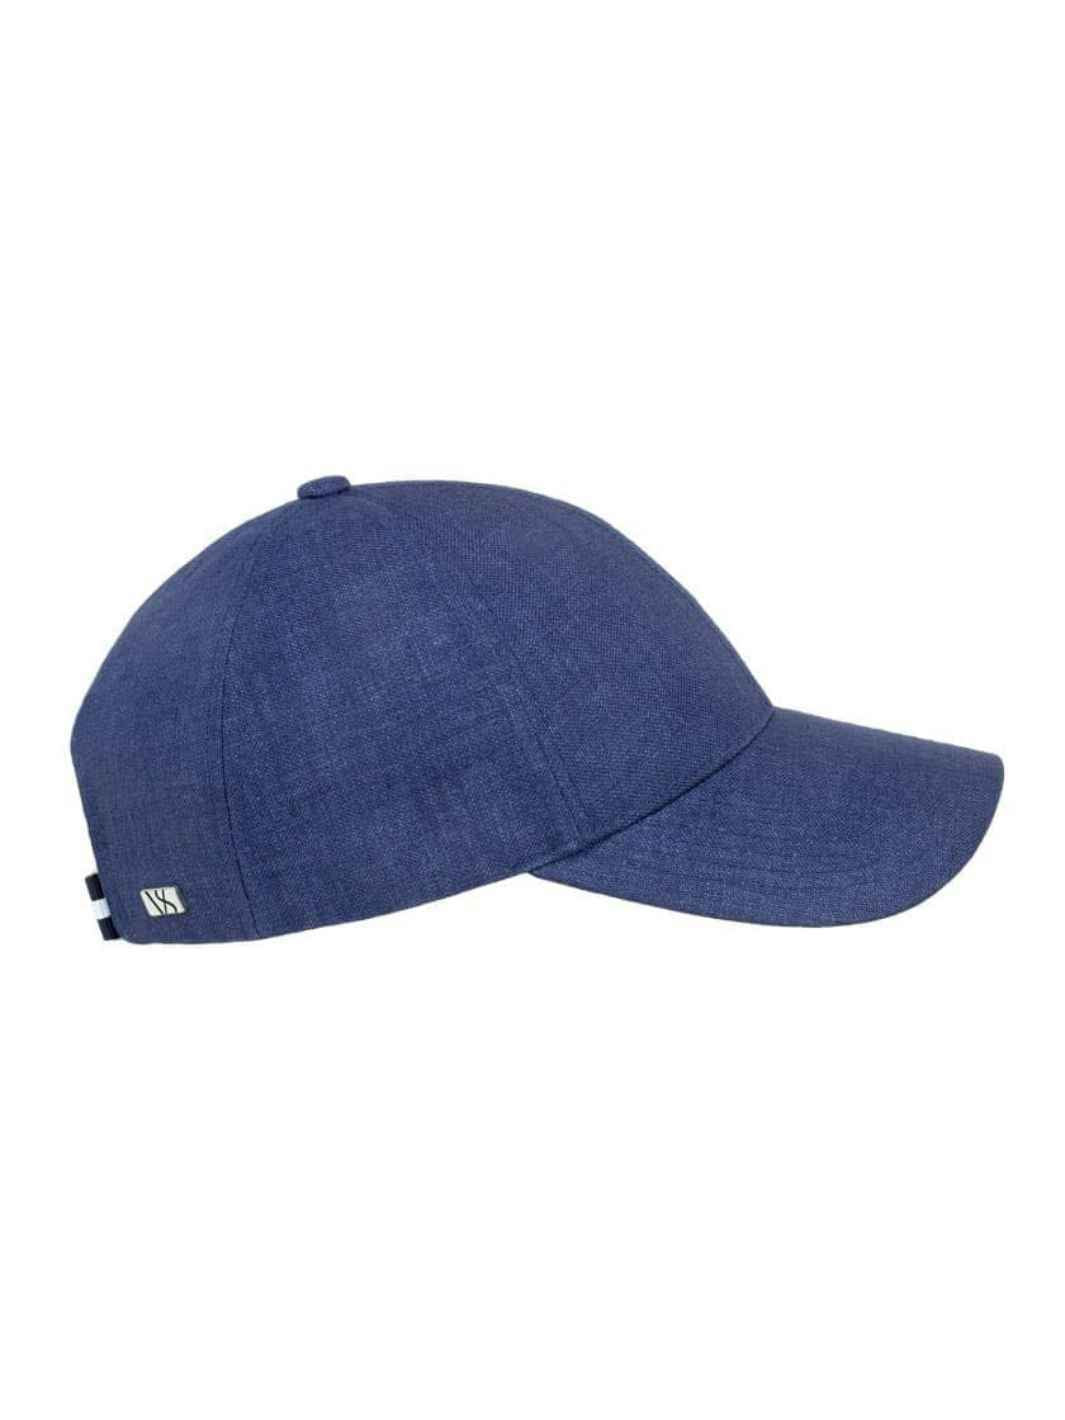 Varsity Headwear Accessories Cap | Oxford Blue Linen